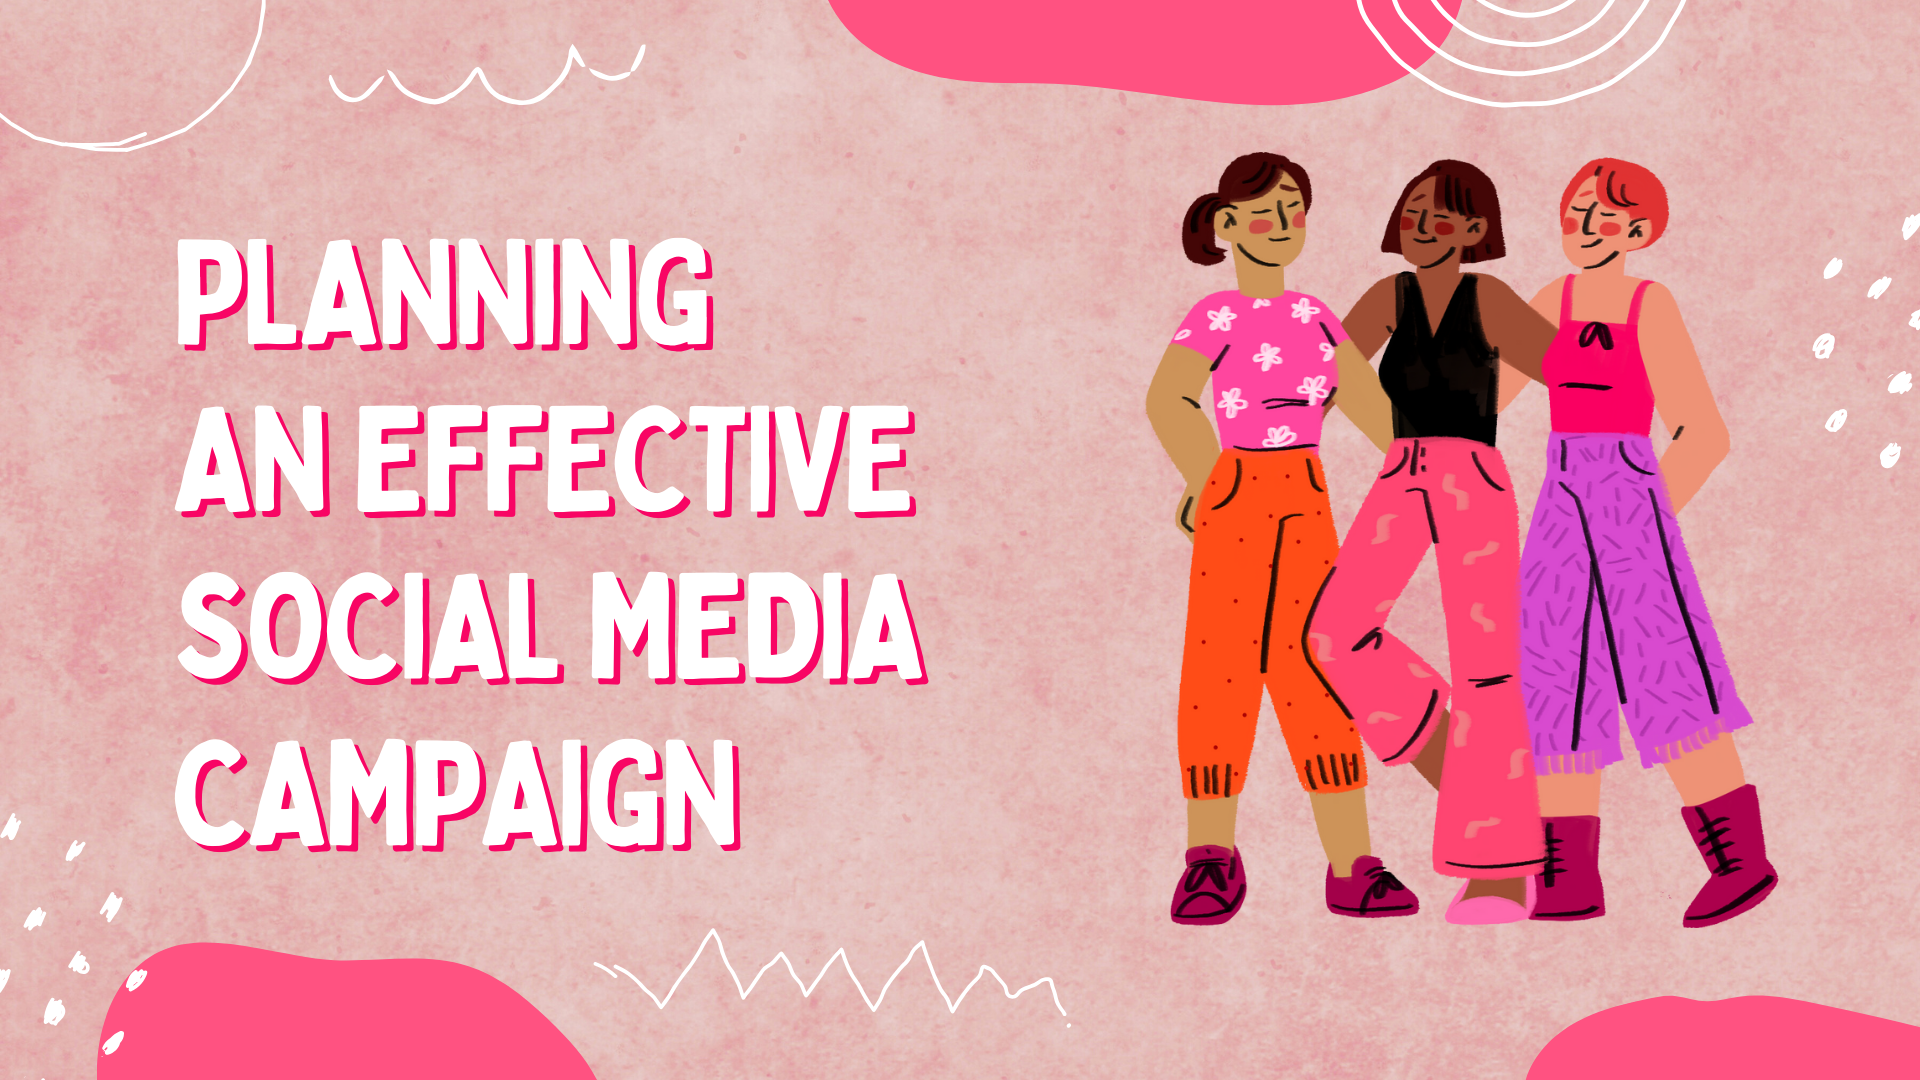 Plan an Effective Social Media Campaign